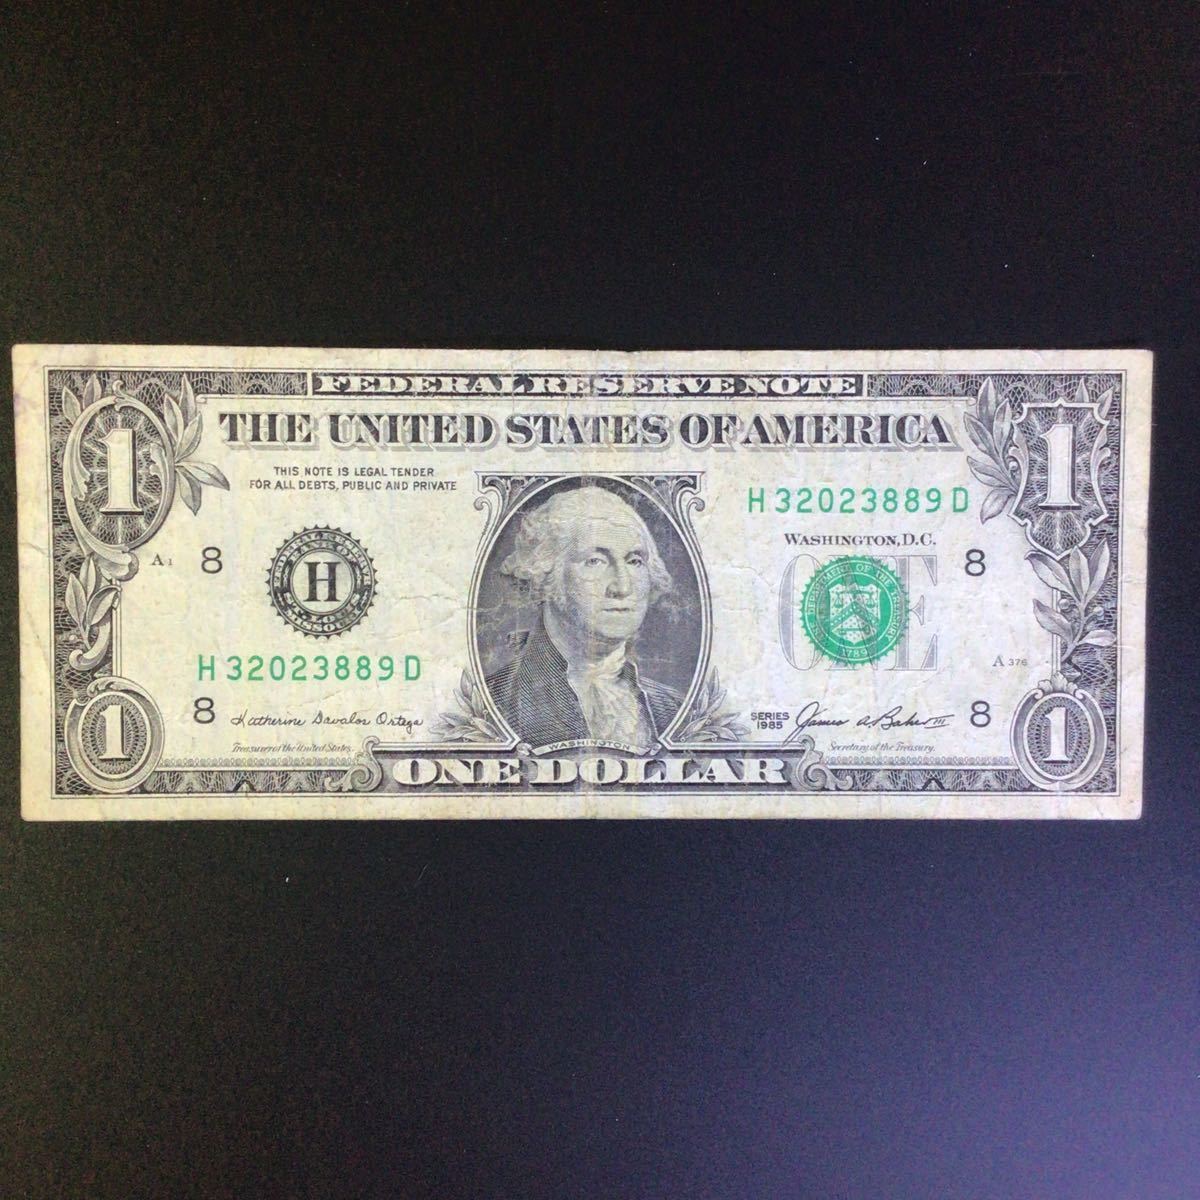 World Paper Money UNITED STATES OF AMERICA 1 Dollar《George Washington》【1985】『SERIES OF 1985』〔St.Louis〕_画像1